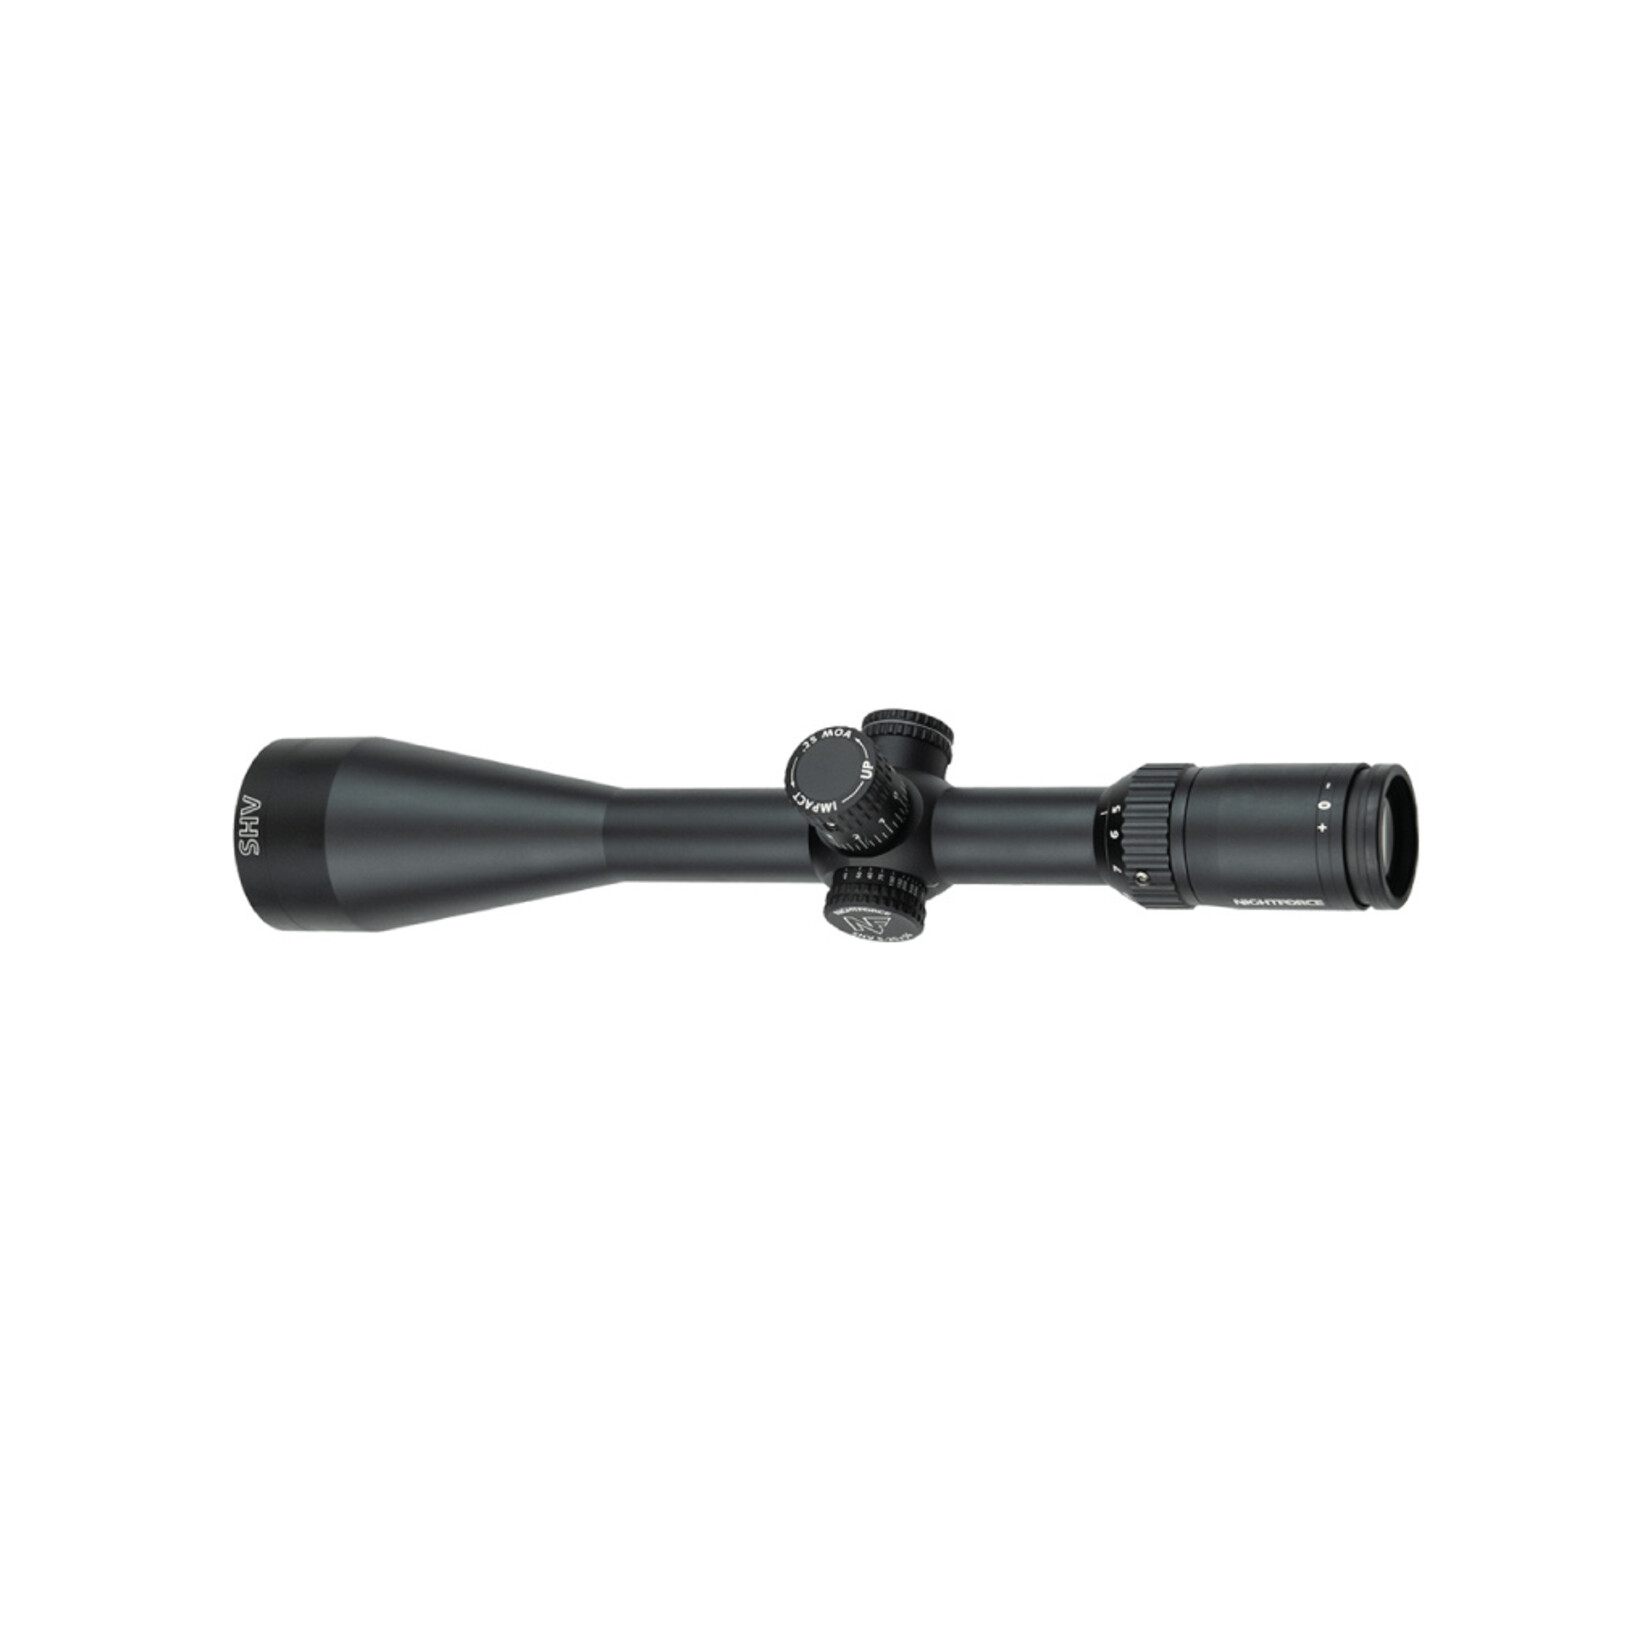 Nightforce Optics SHV 5-20x56 MOAR Illuminated Riflescope